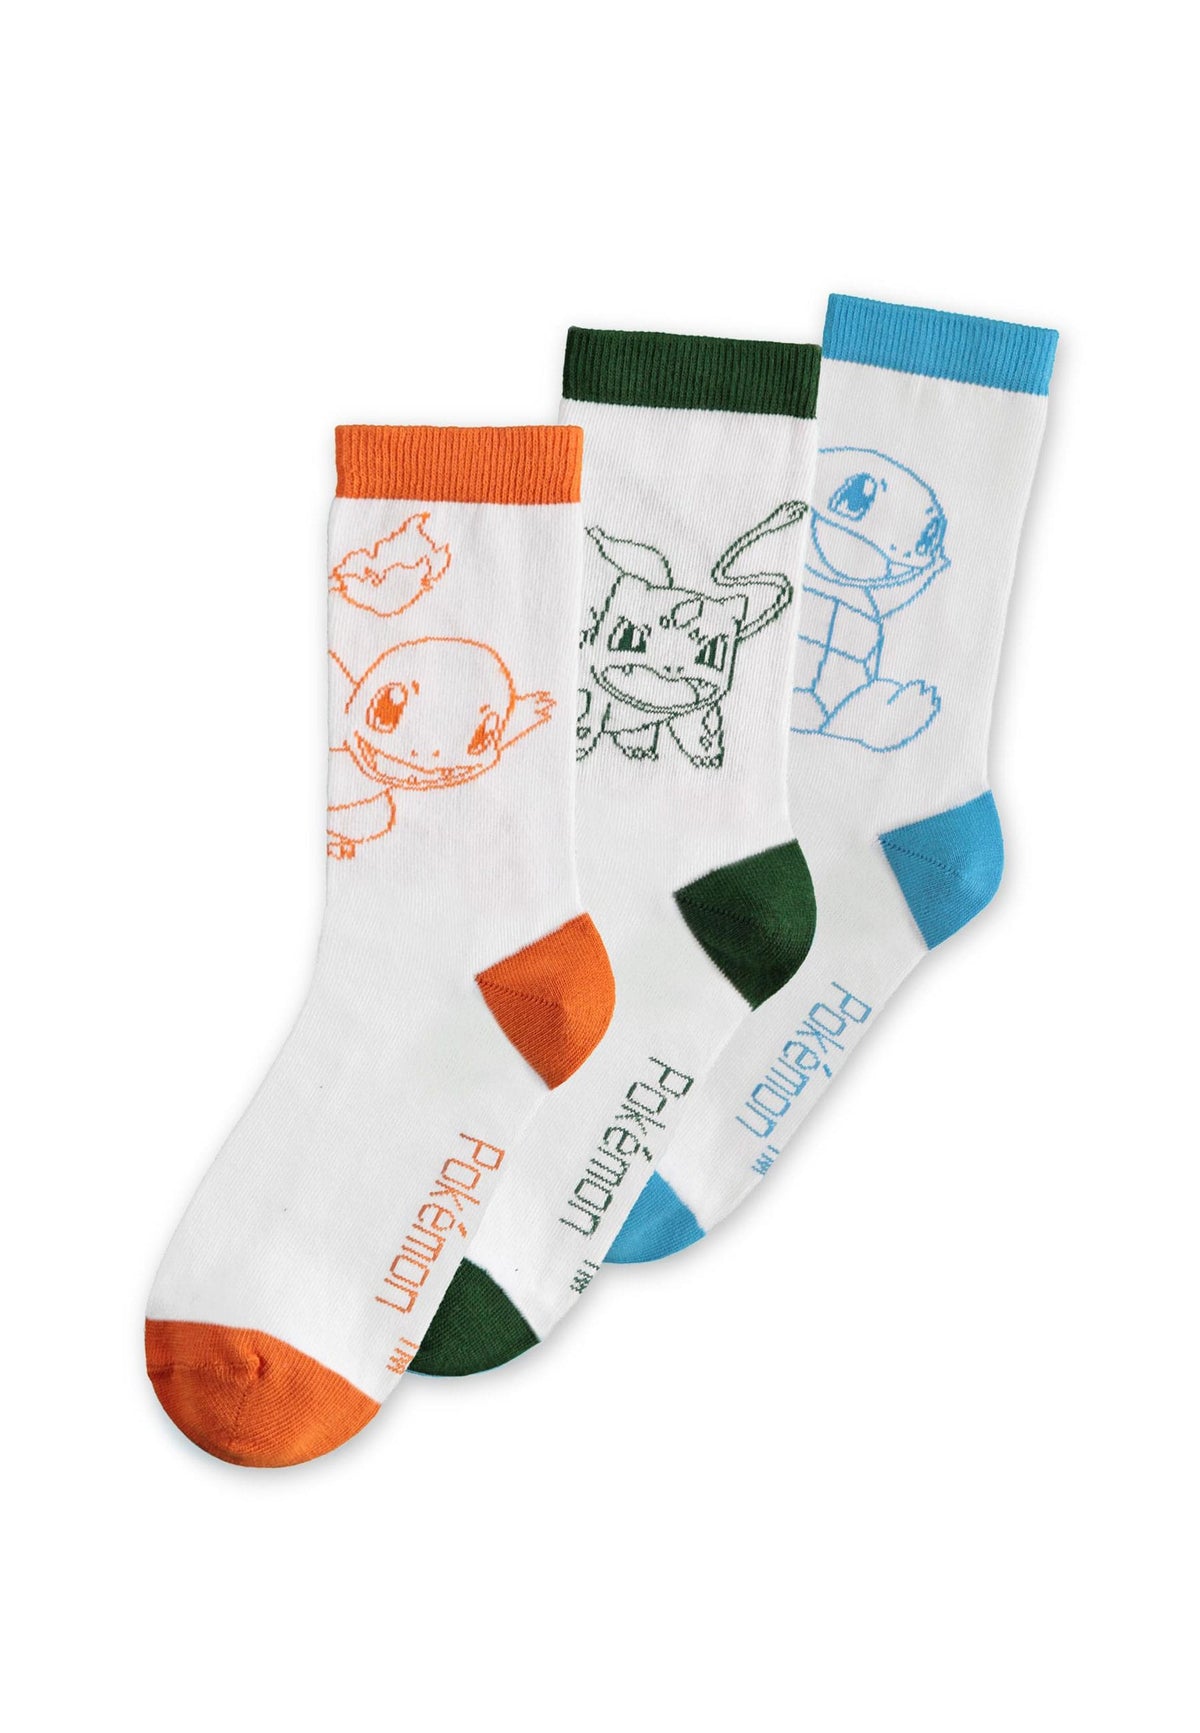 Pokemon - socks - Glumanda, BisaSam, Schiggy - 3 -pack - size 43-46 (difuzed)